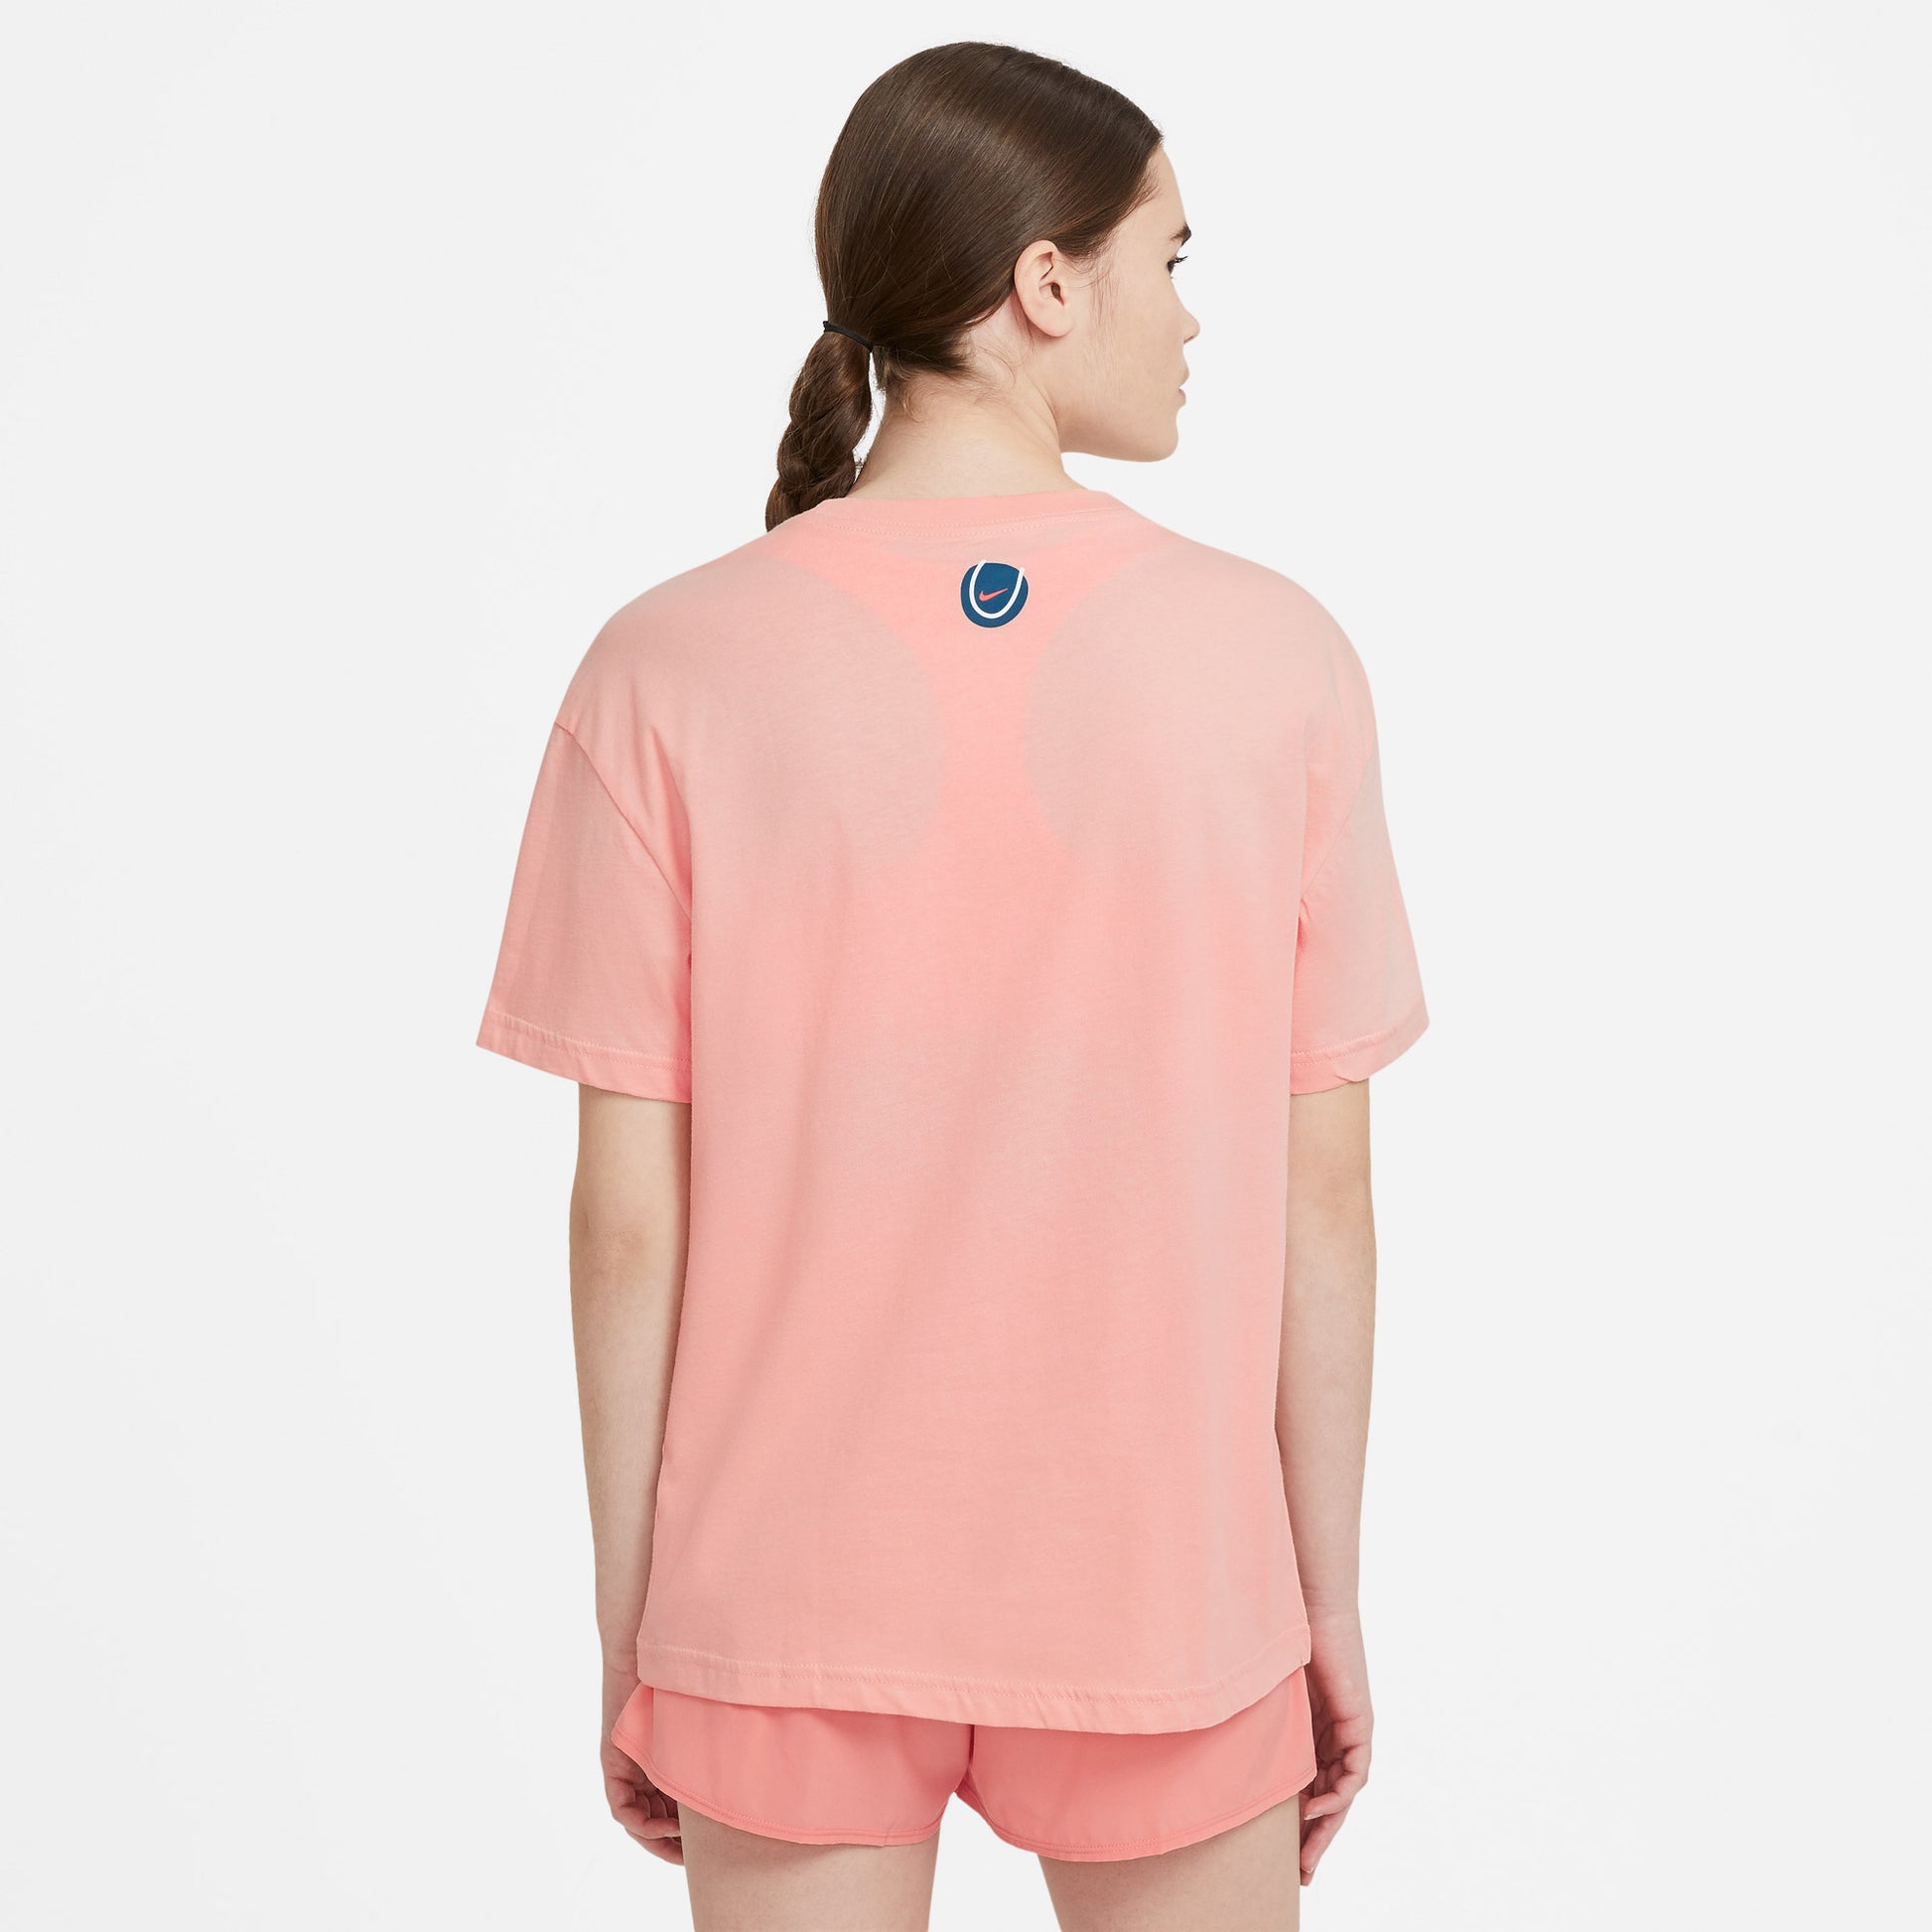 Nike Women's Graphic Tennis T-Shirt Orange (2)